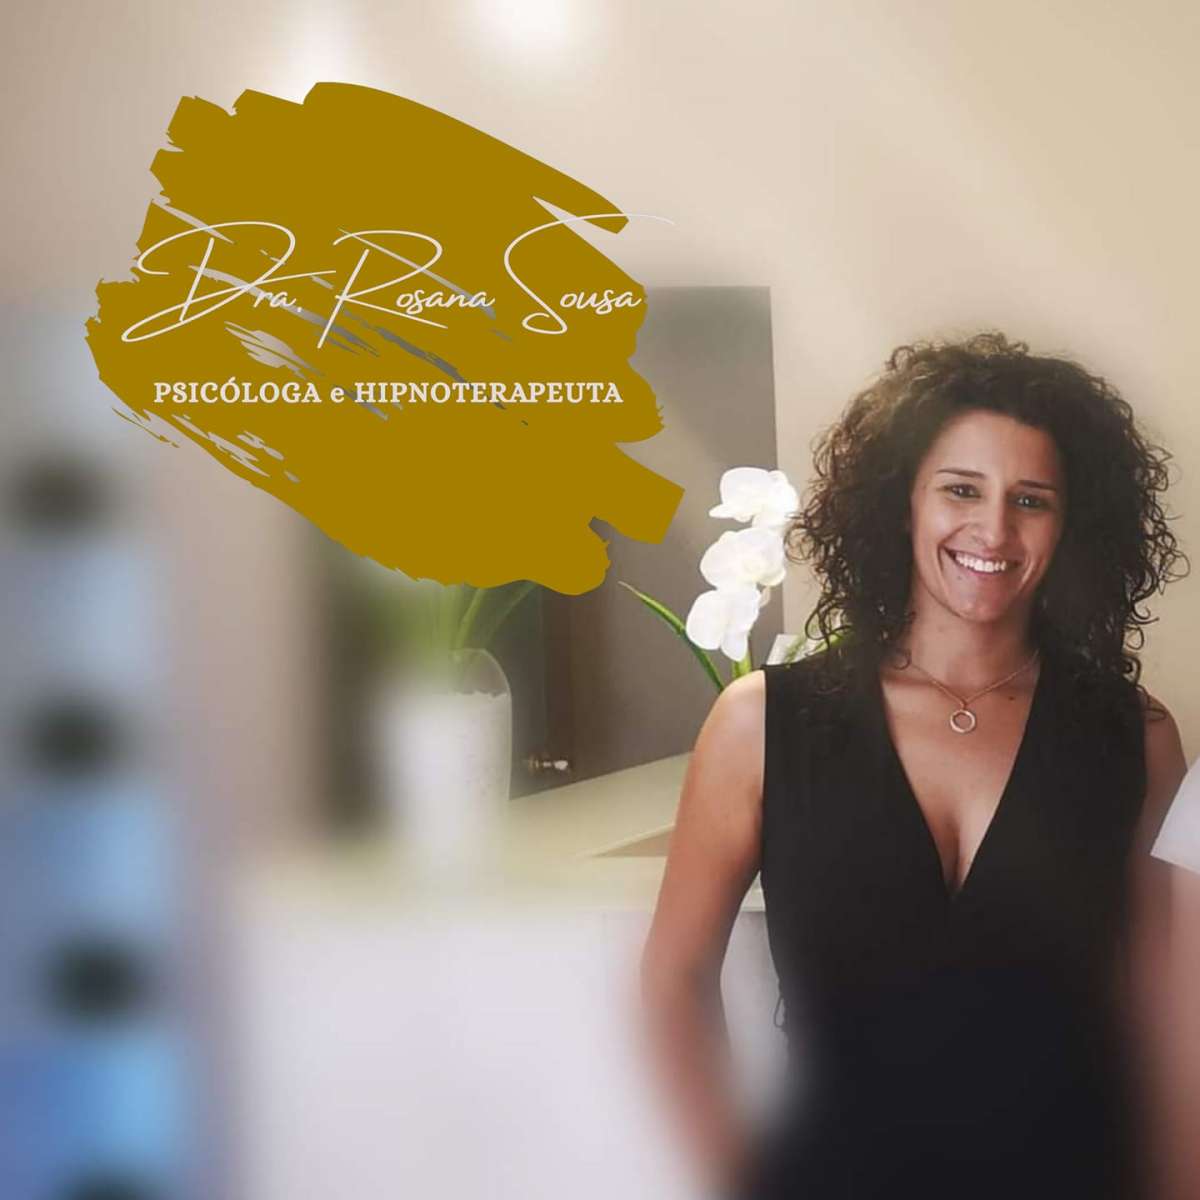 Dra. Rosana Sousa - Psicóloga e Hipnoterapeuta - Matosinhos - Hipnoterapia